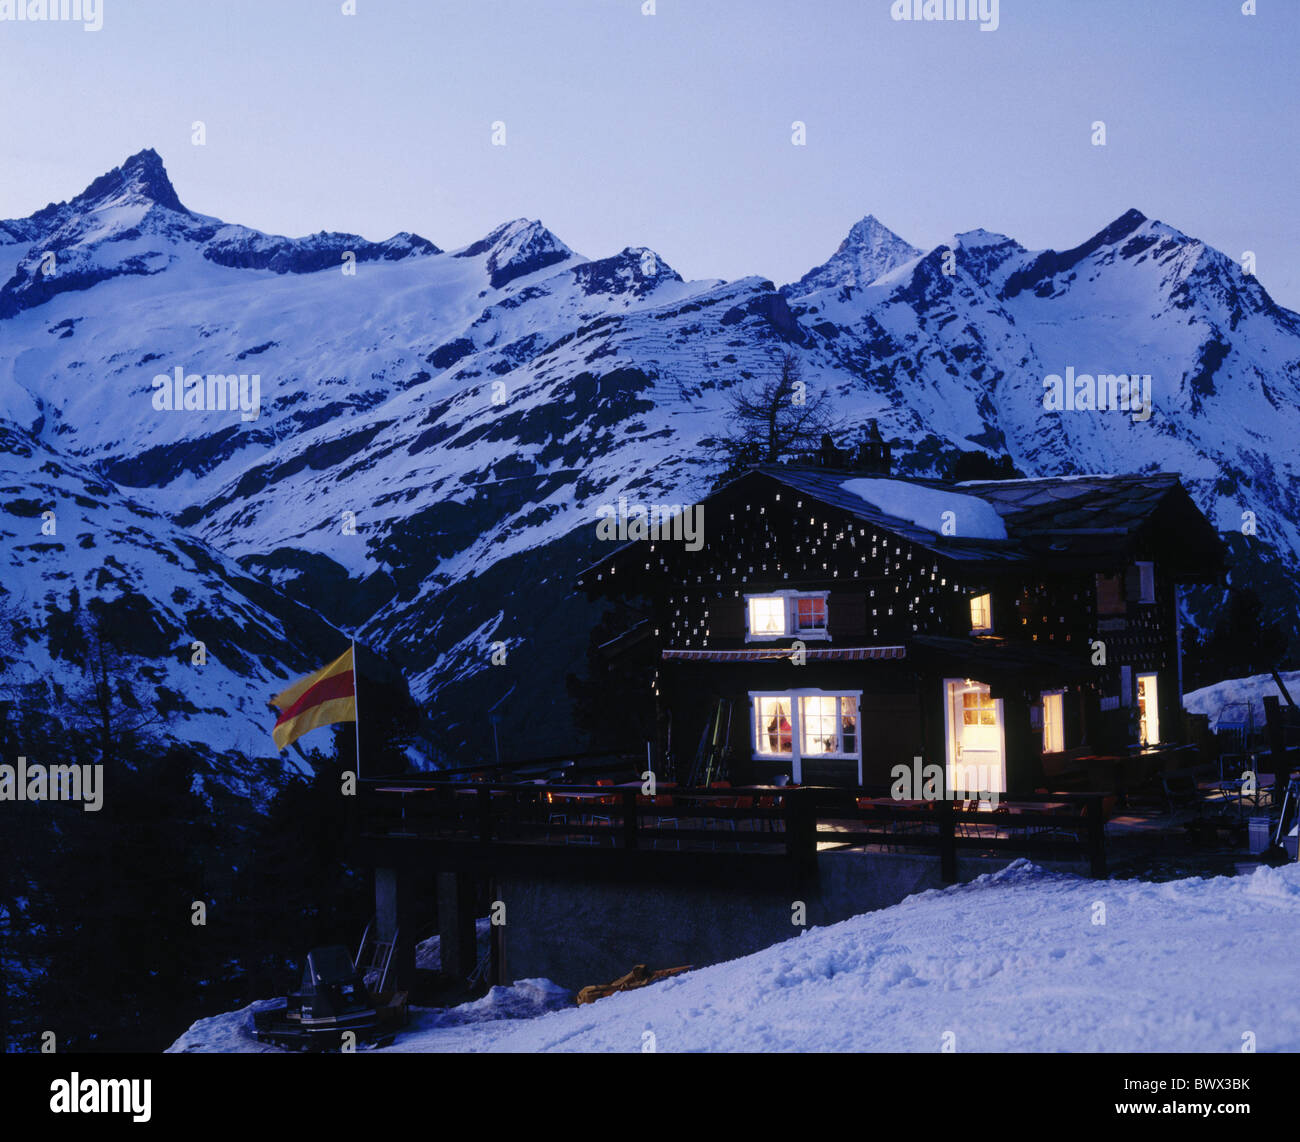 evening alp hut outside hut mountains alpine Alps lighting chalet mountains Switzerland Europe terrace Stock Photo